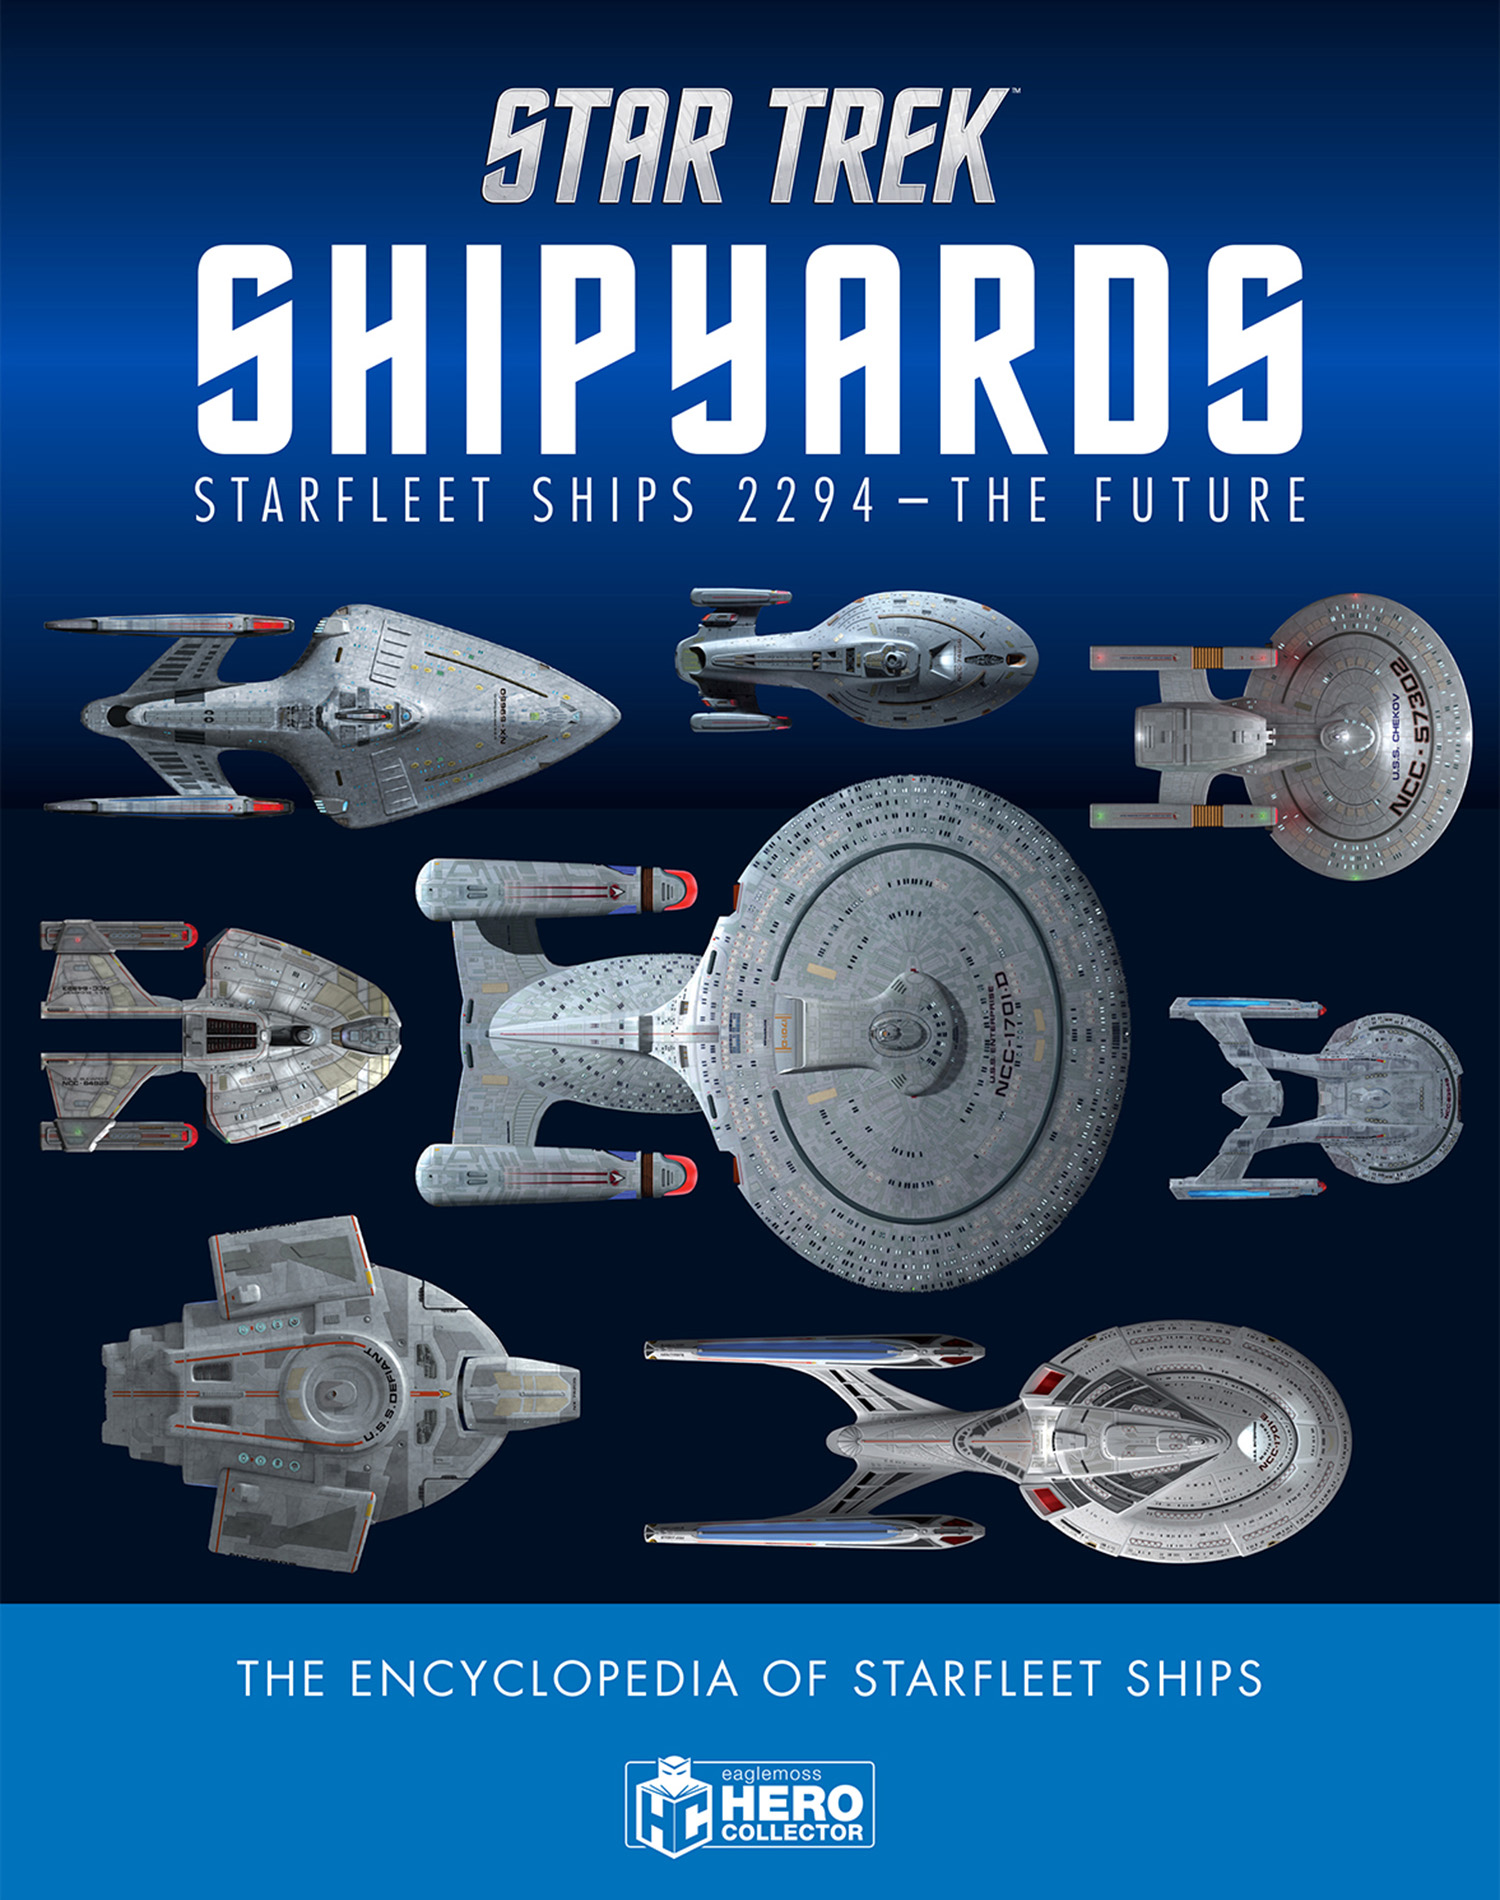 Star Trek Shipyards: Starfleet Ships 2294 - The Future